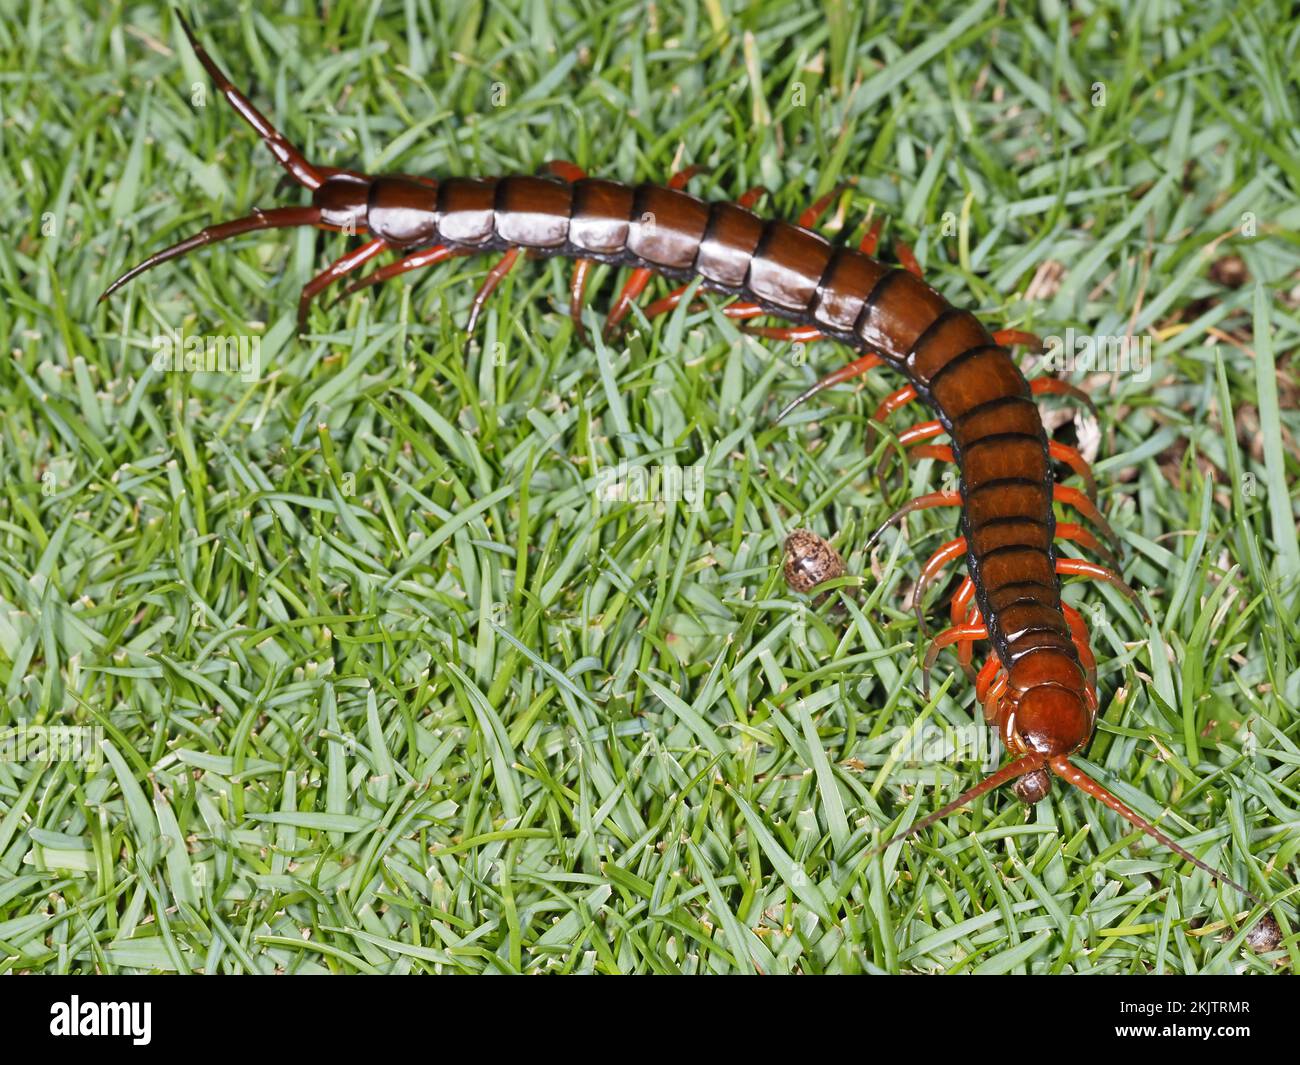 Hawaiian centipede (Scolopendra subspinipes) - large medically significant venomous centipede - on Maui, Hawaii Stock Photo